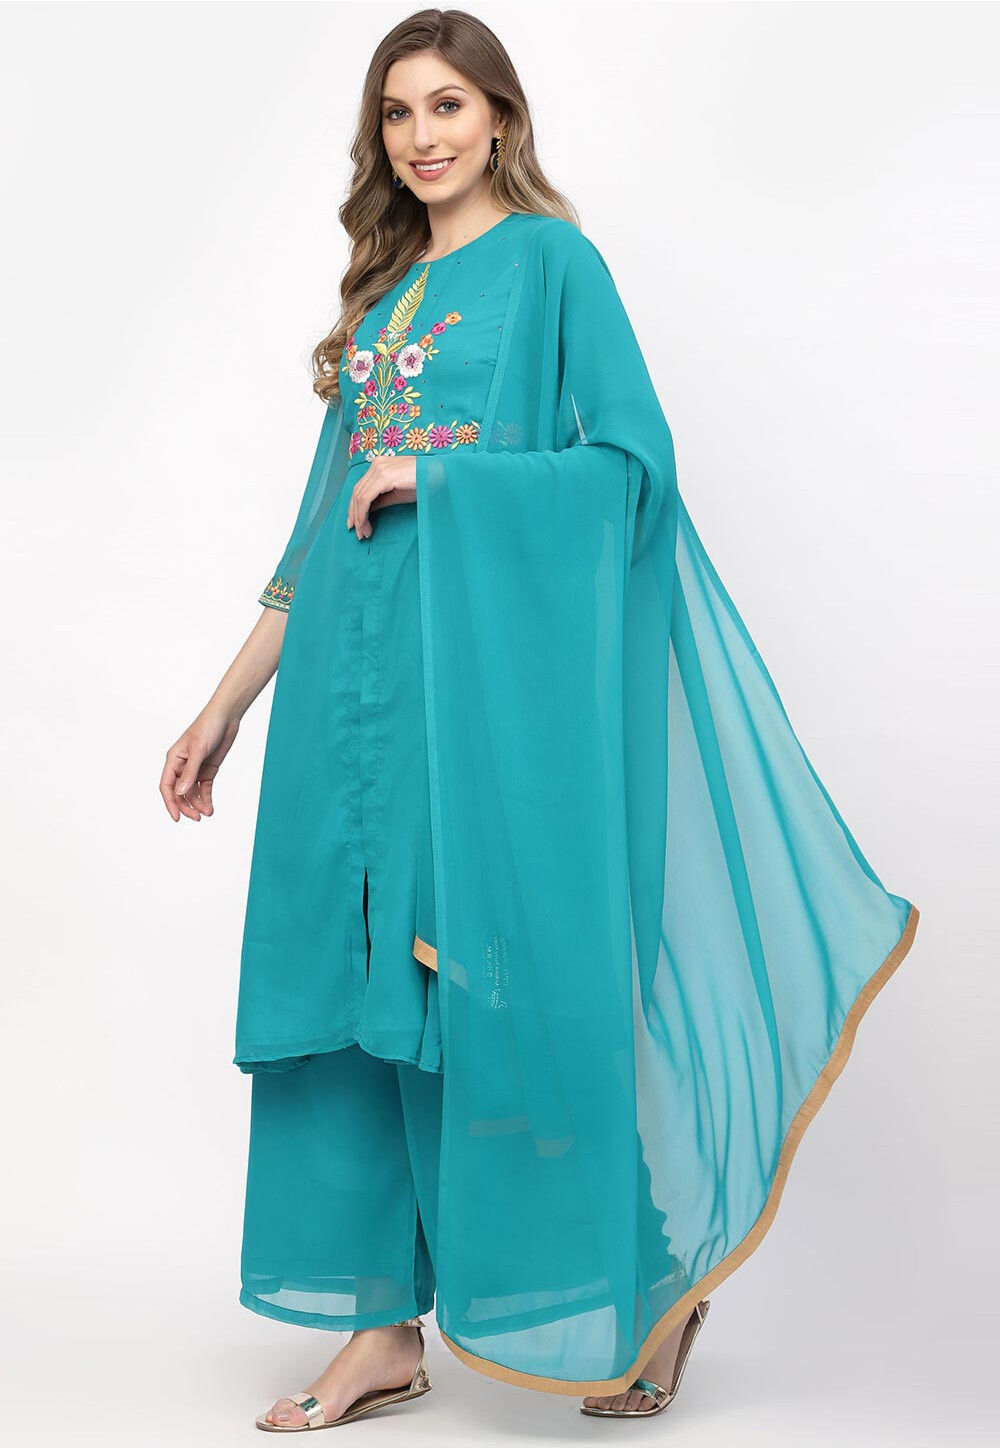 Embroidered Georgette Pakistani Suit In Light Blue Kve363 